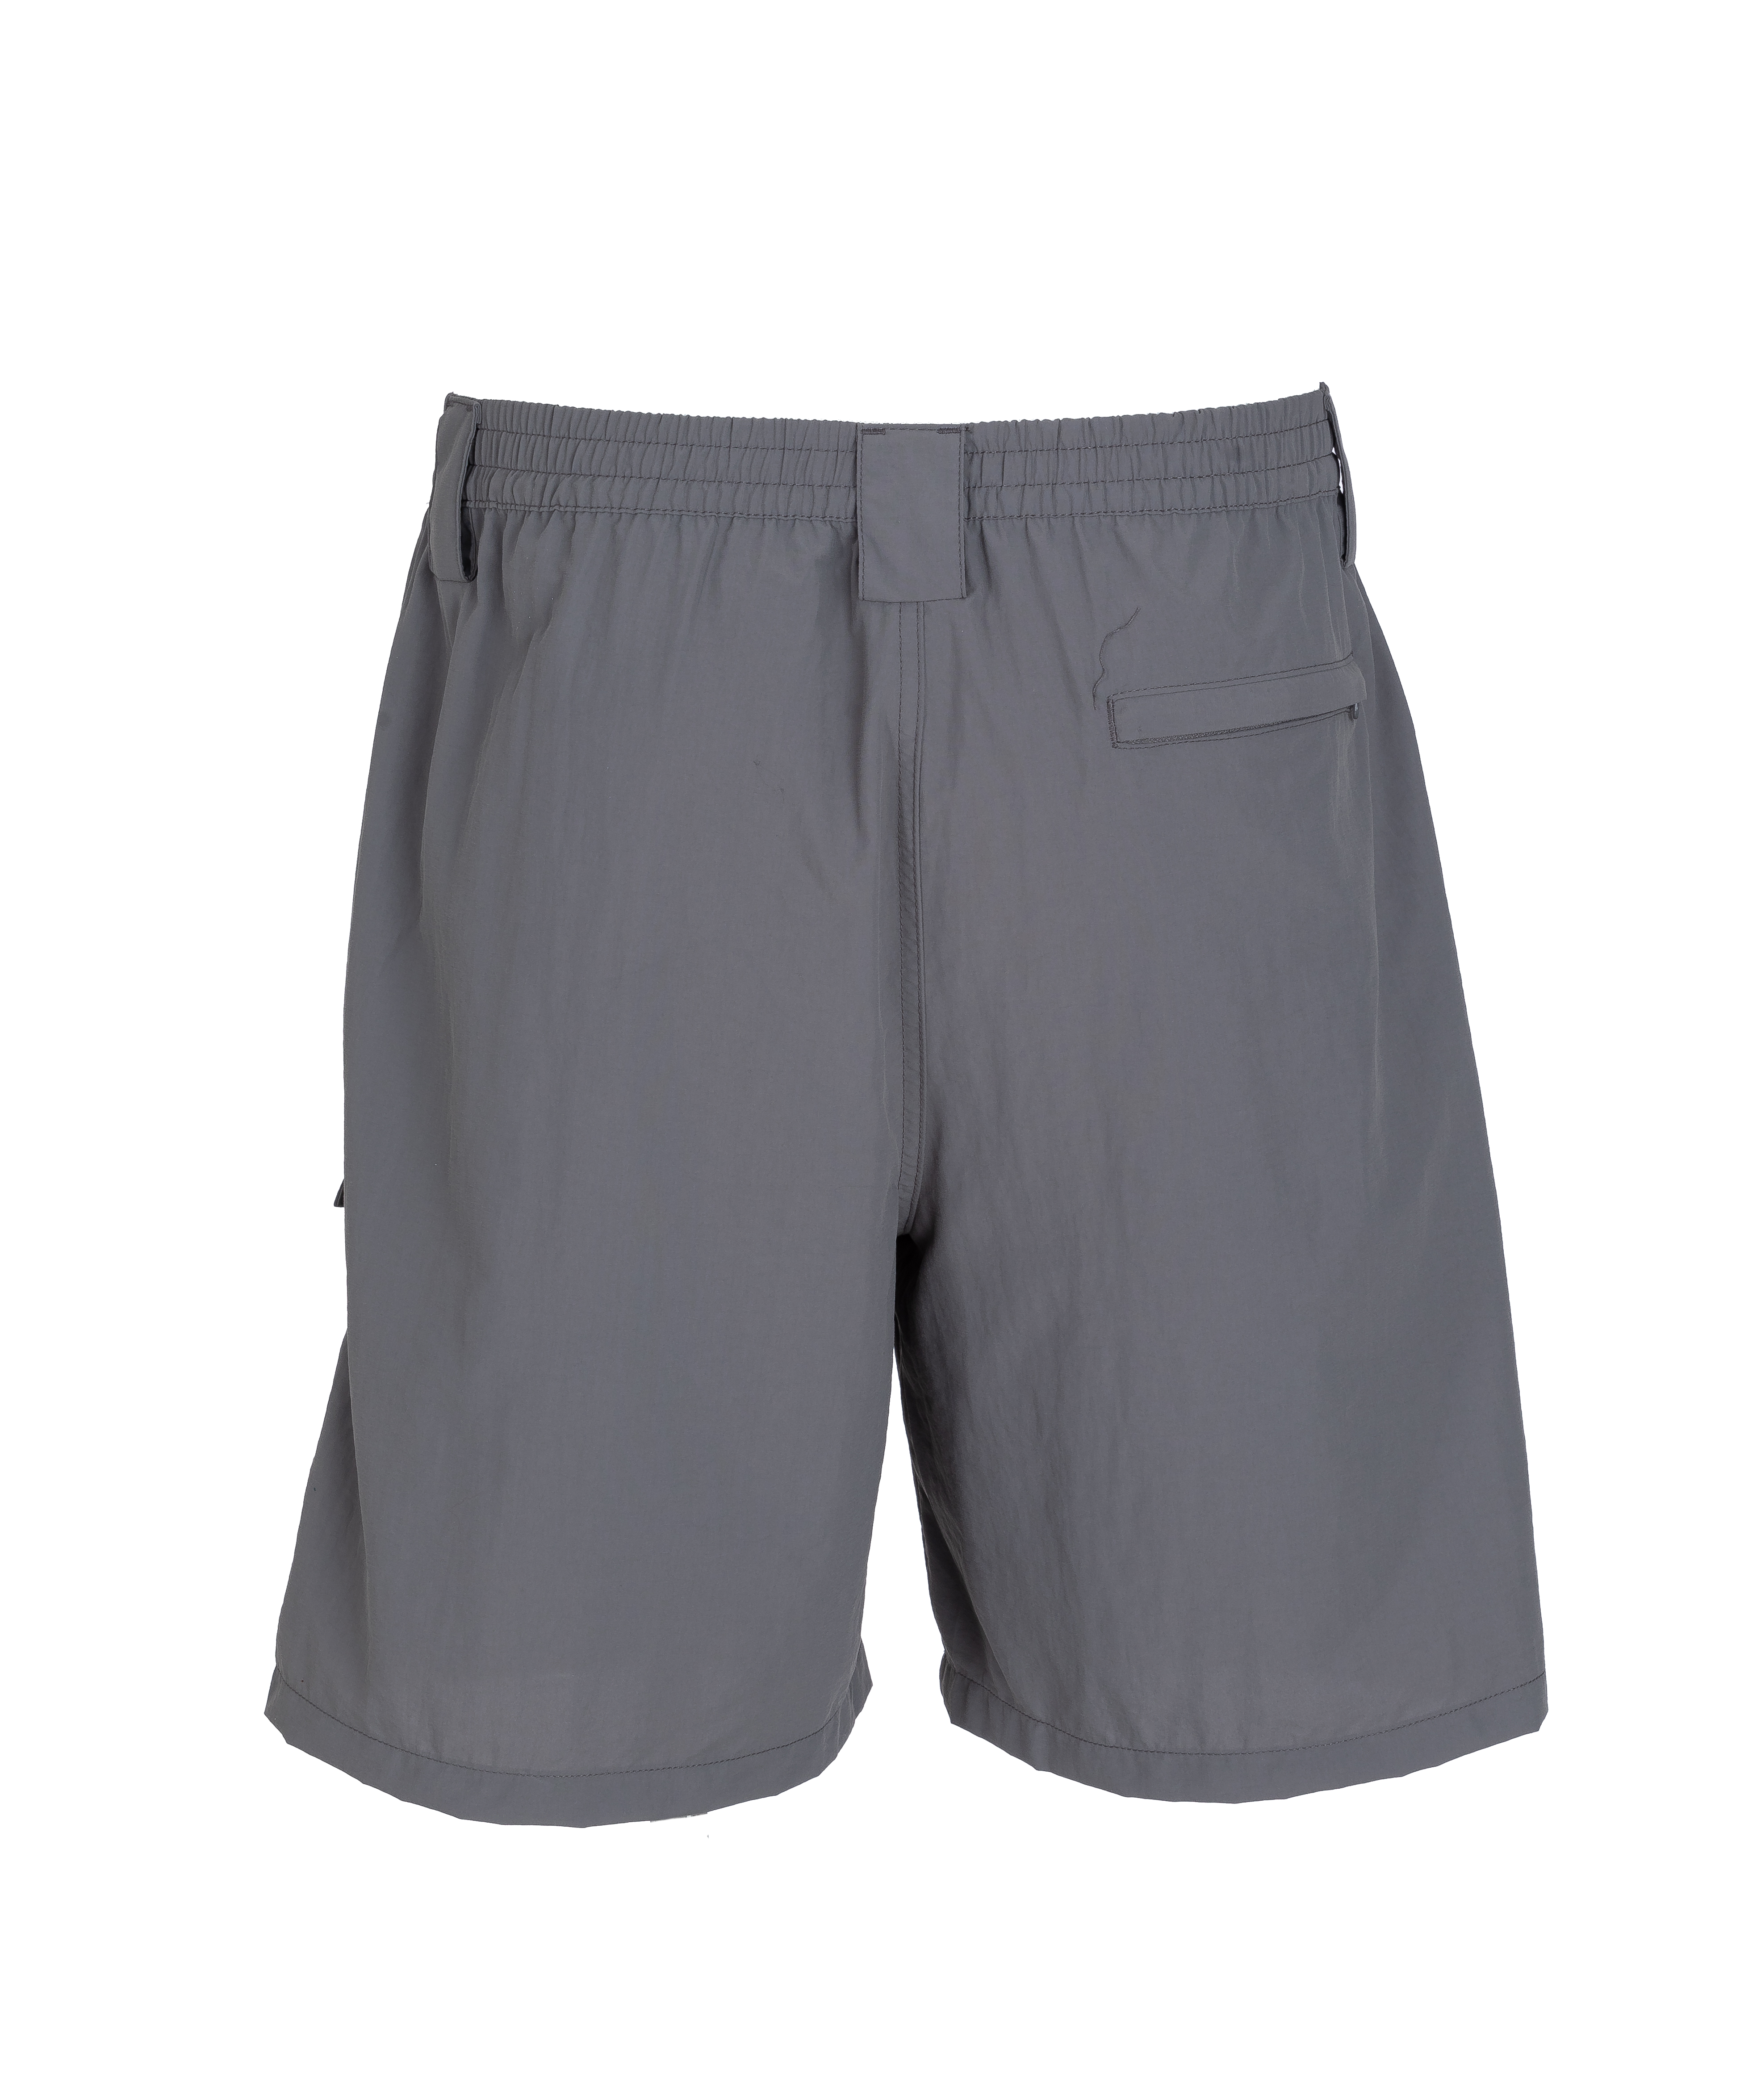 Bimini Bay Zipper Casual Shorts for Men